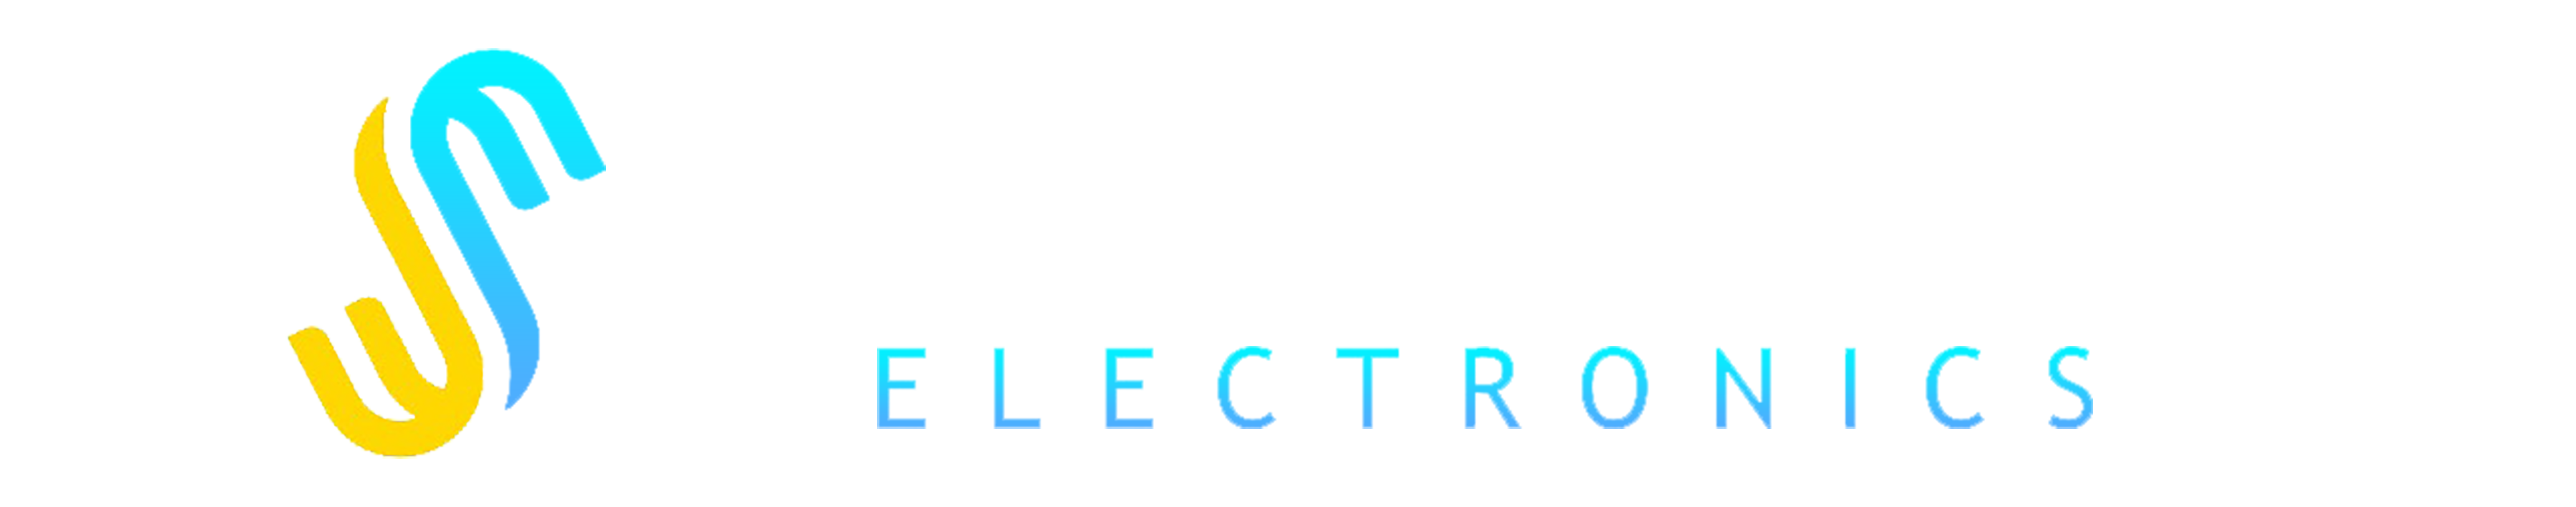 super logo